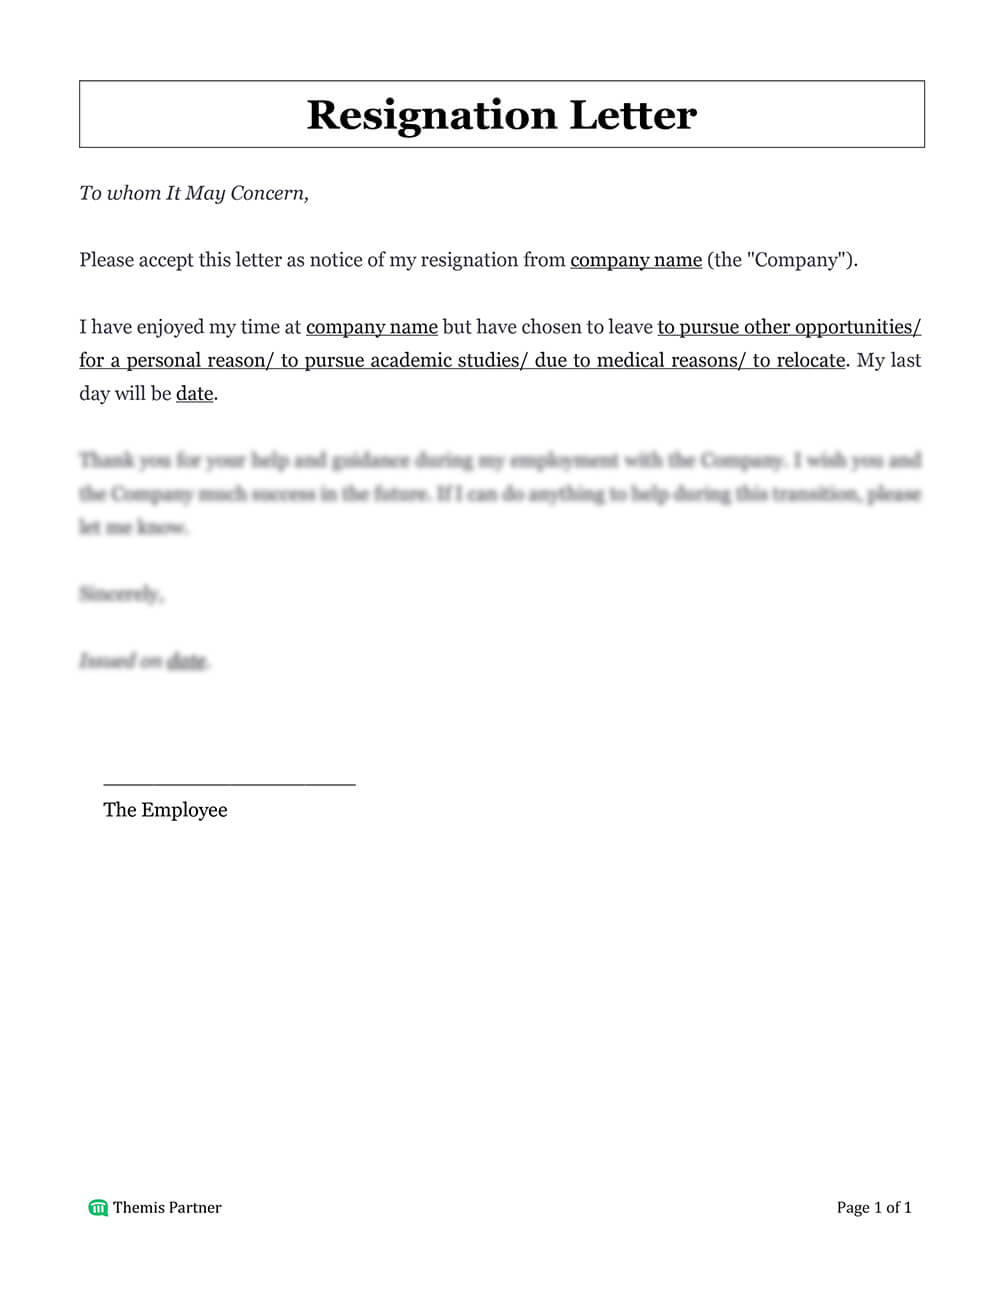 Employee resignation letter template